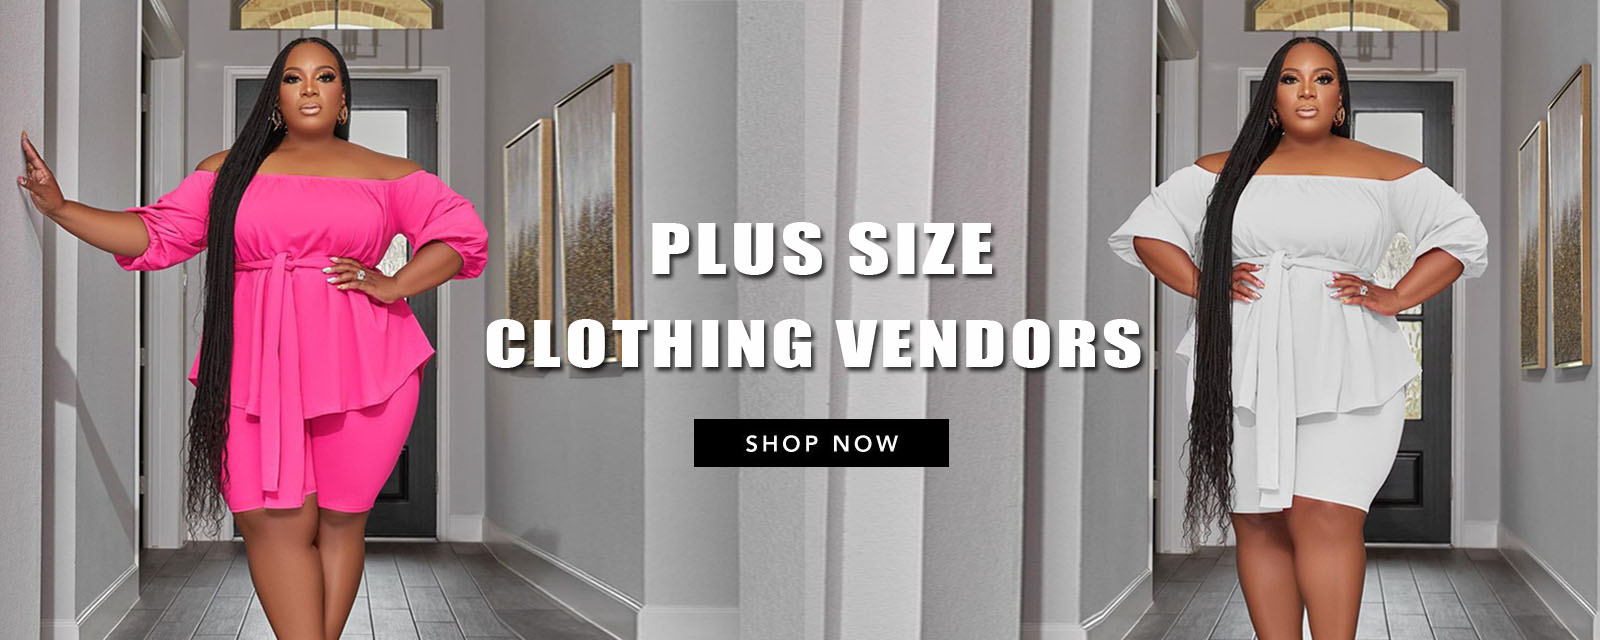 plus size clothing vendors